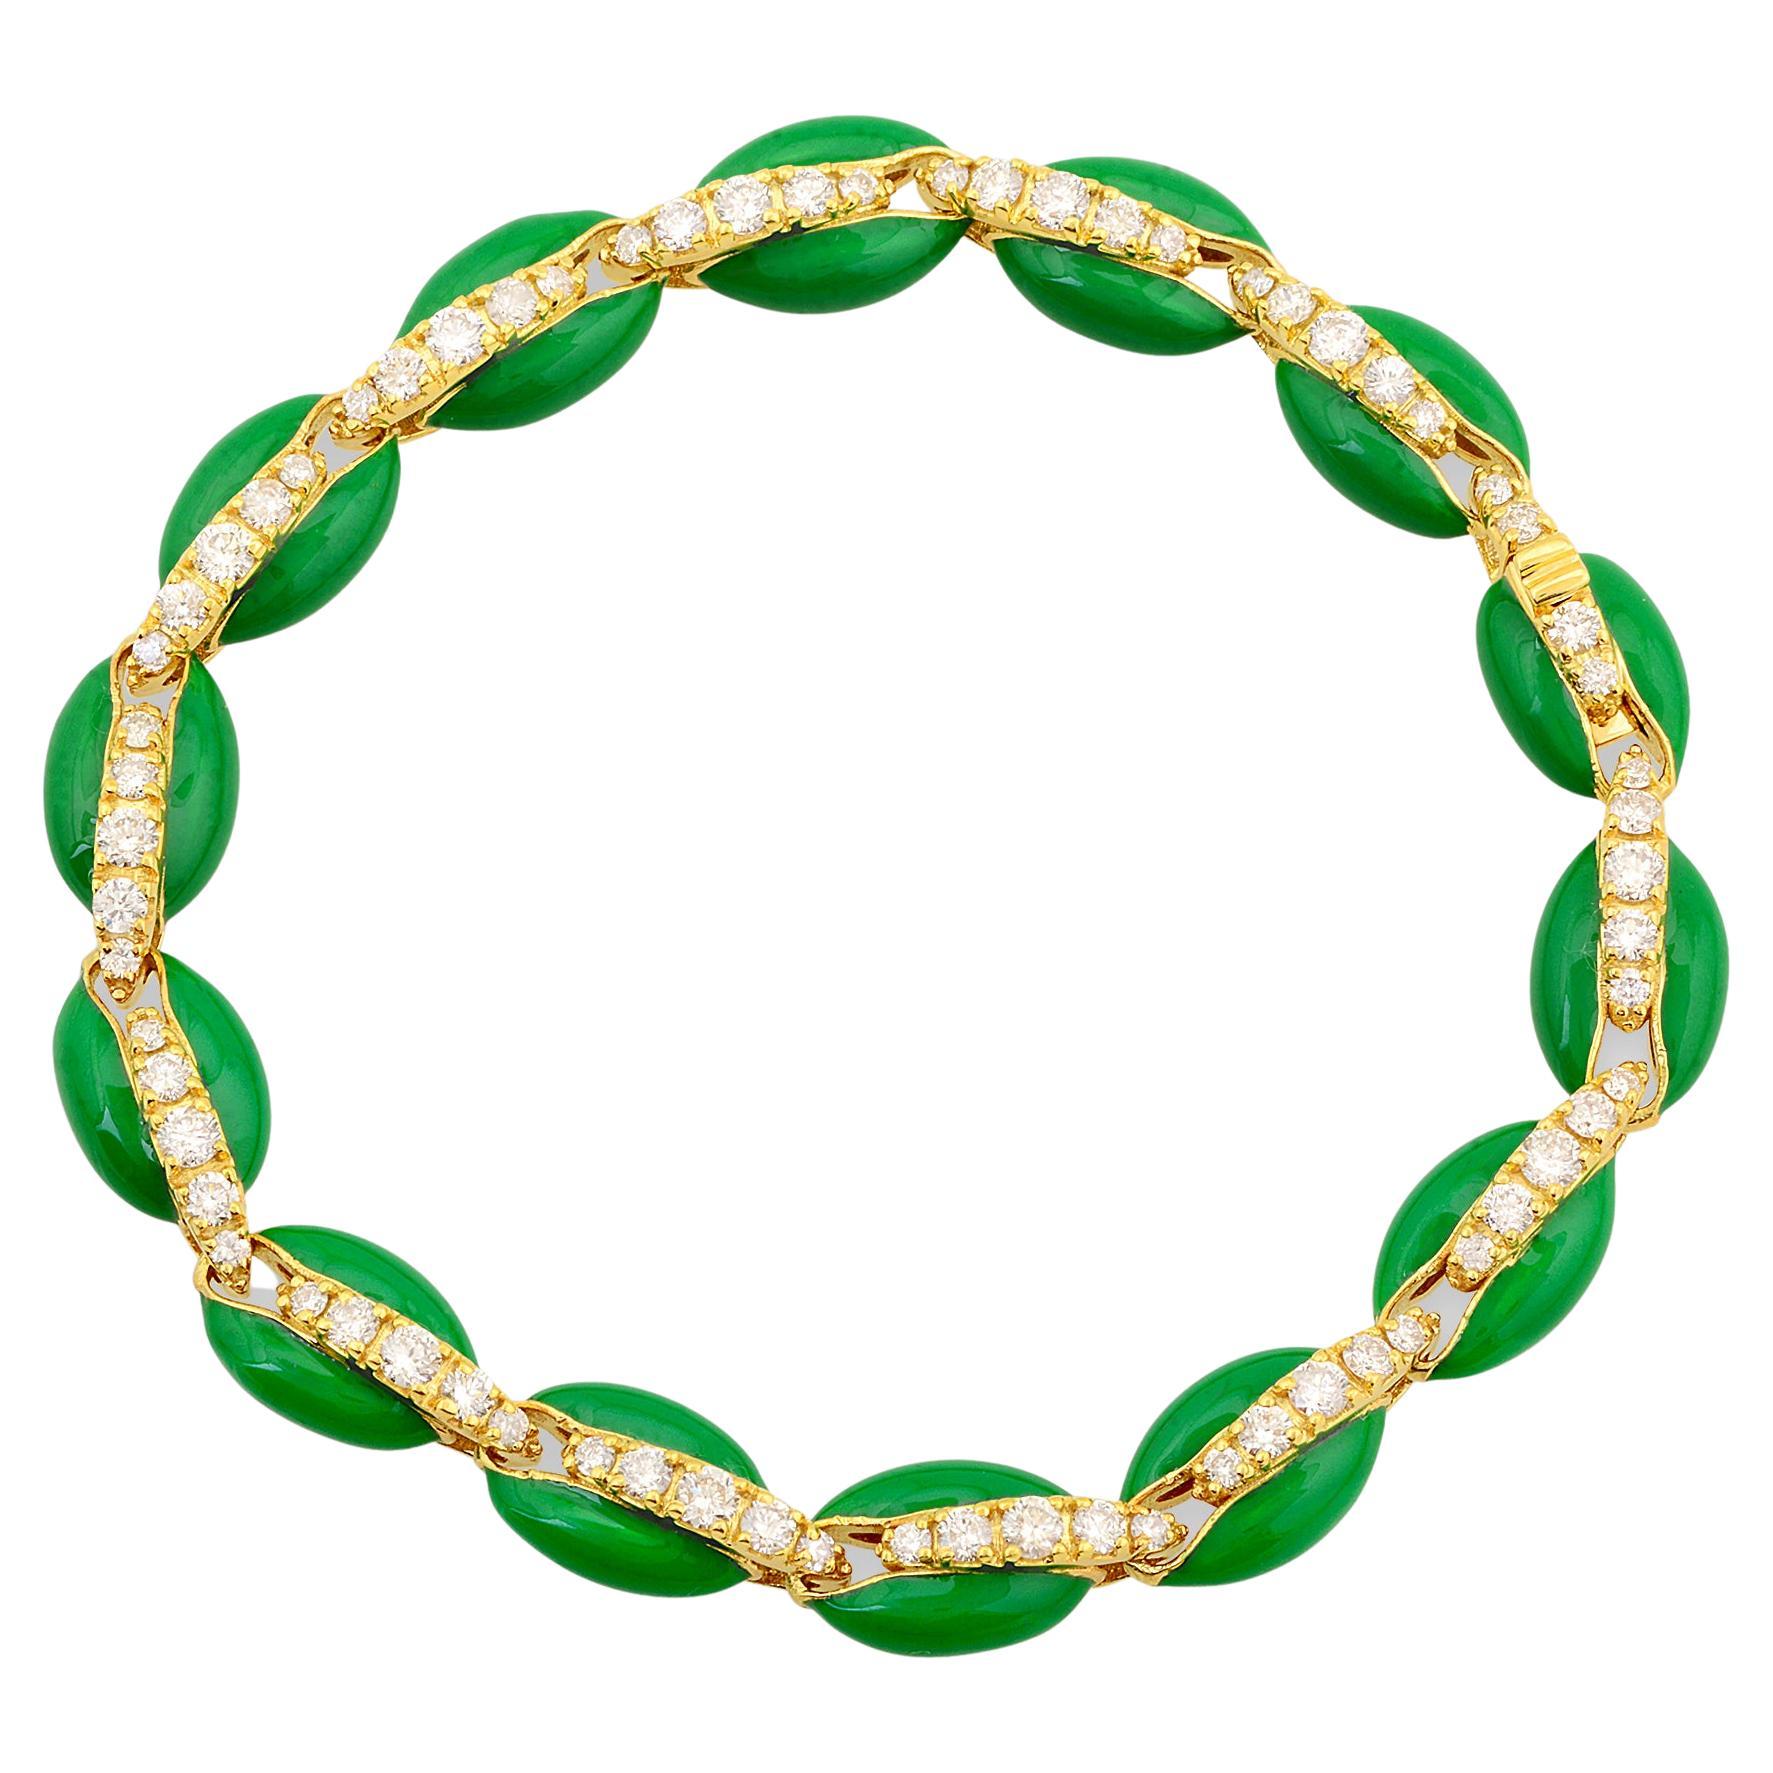 1.8 Carat Diamond Pave Cowrie Shell Charm Bracelet 10k Yellow Gold Green Enamel For Sale